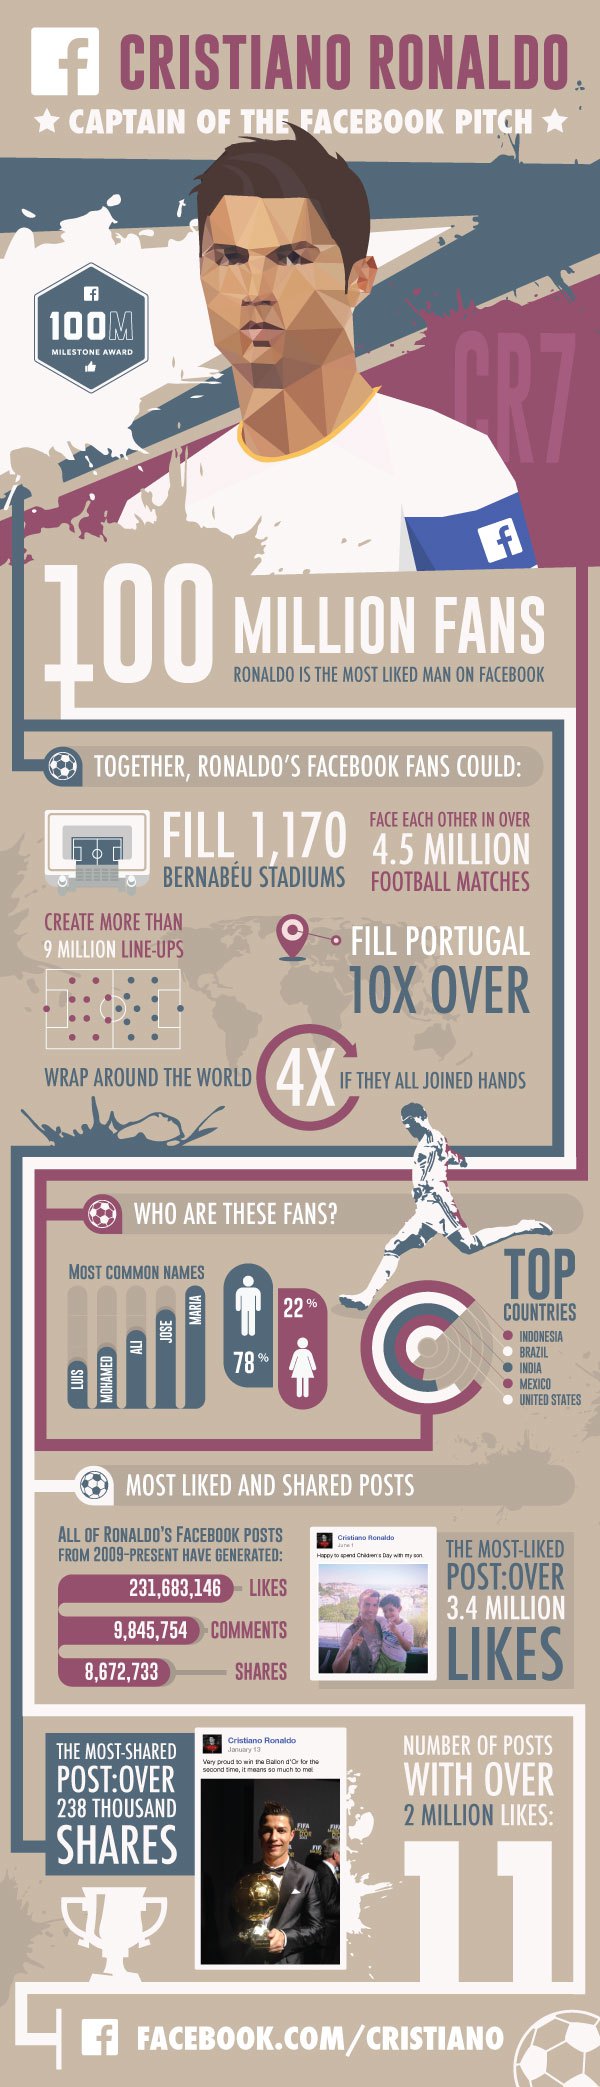 Cristiano Ronaldo Facebook infographic